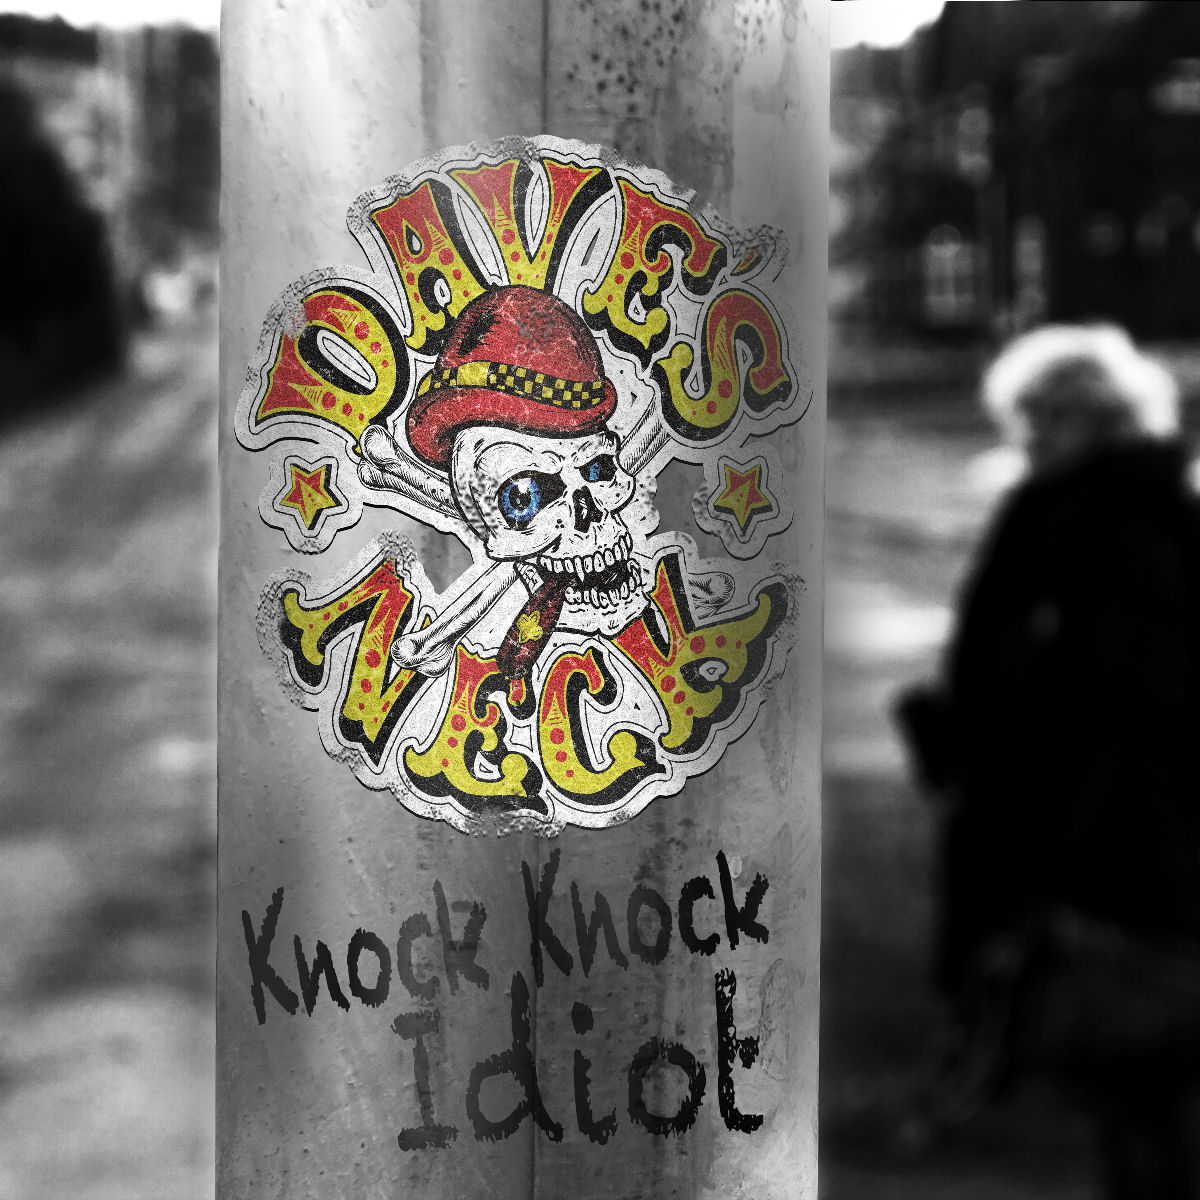  Dave’s Neck – “Knock Knock Idiot”